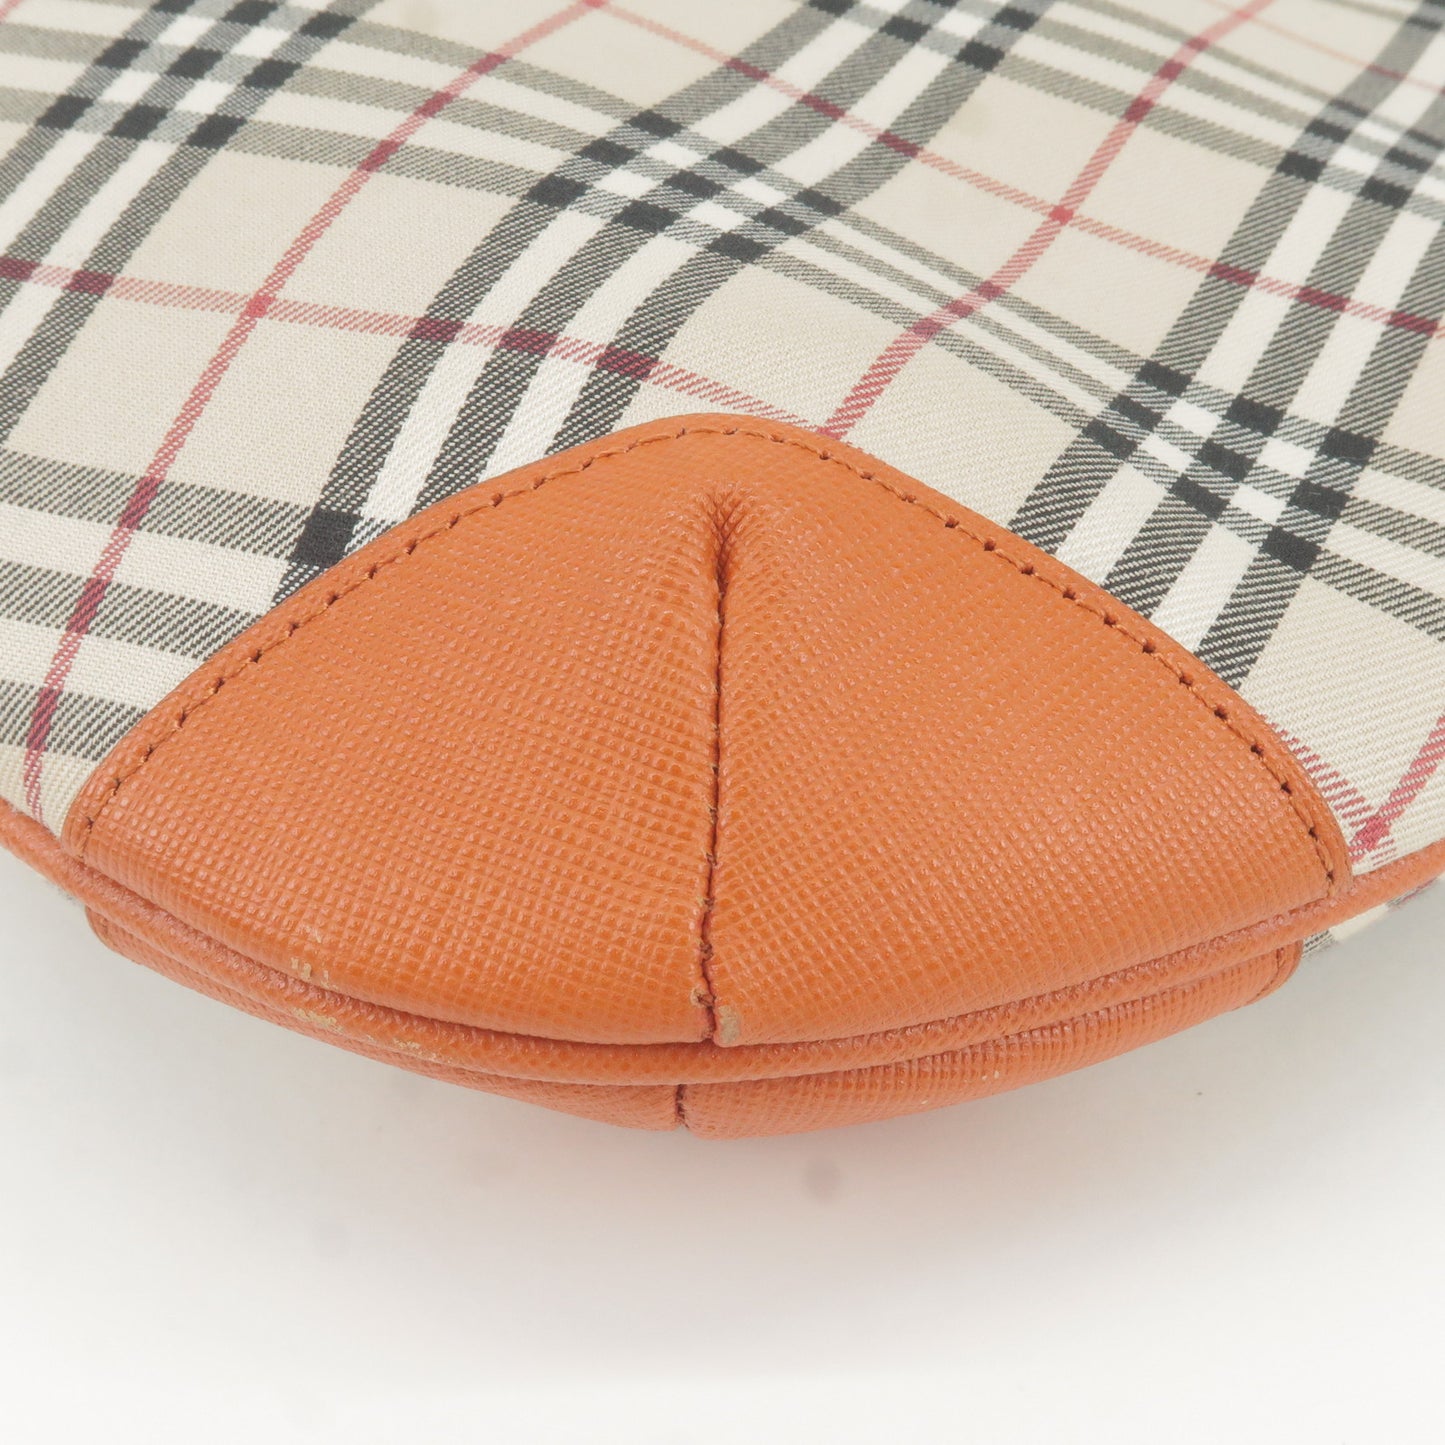 BURBERRY Nova Plaid Canvas Leather Shoulder Bag Beige Orange